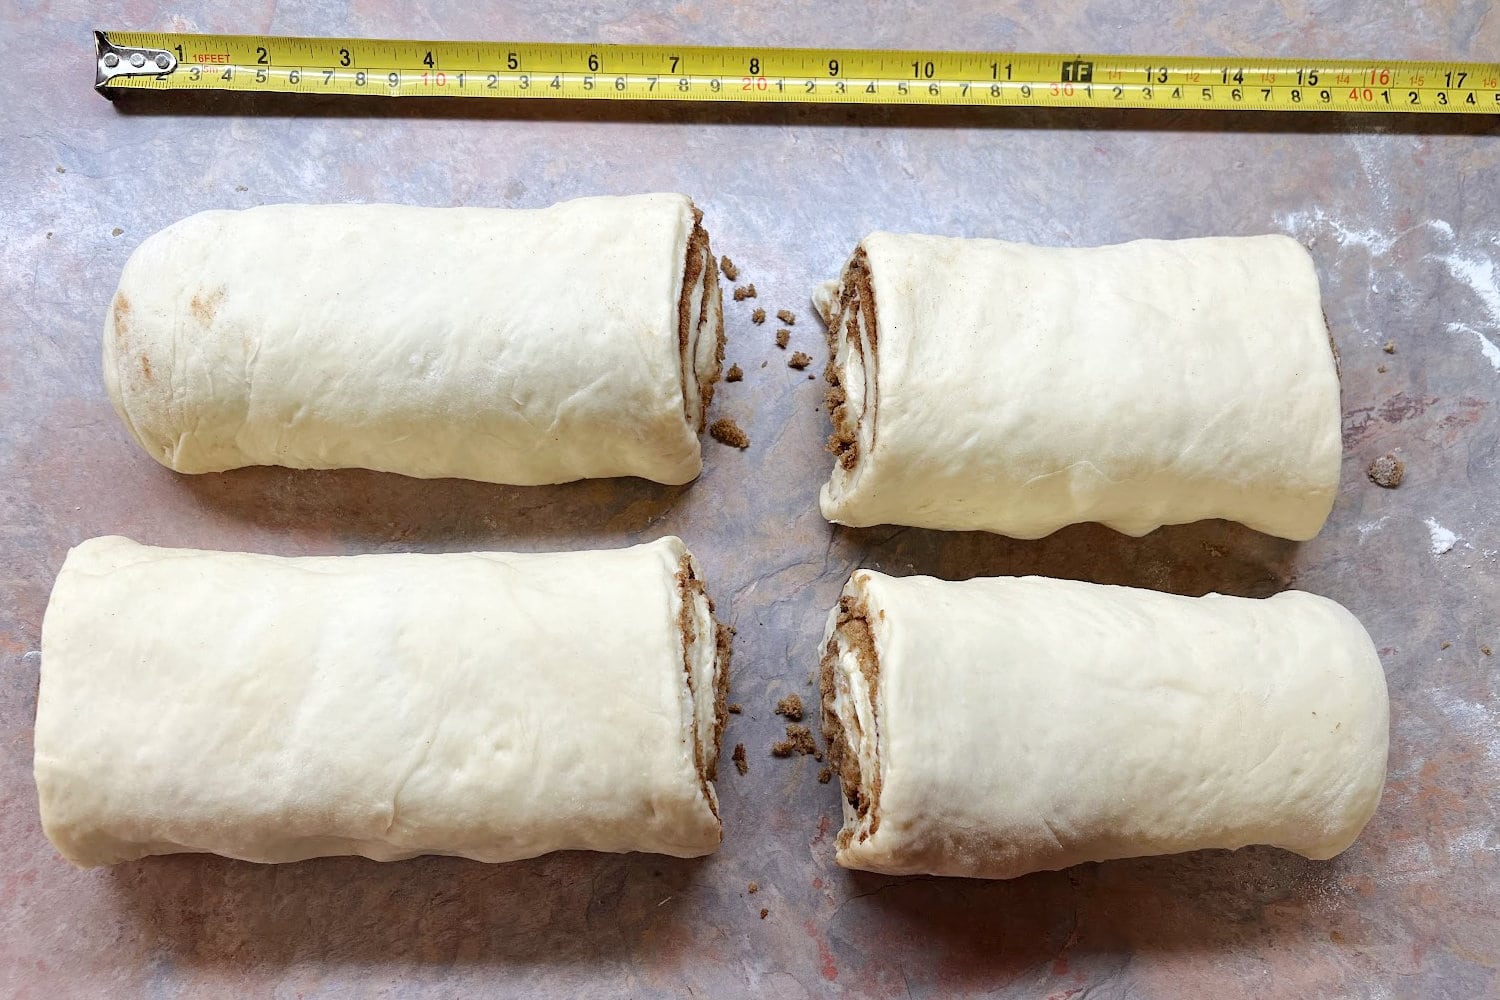 The halves of cinnaon roll dough cut into quarters. 